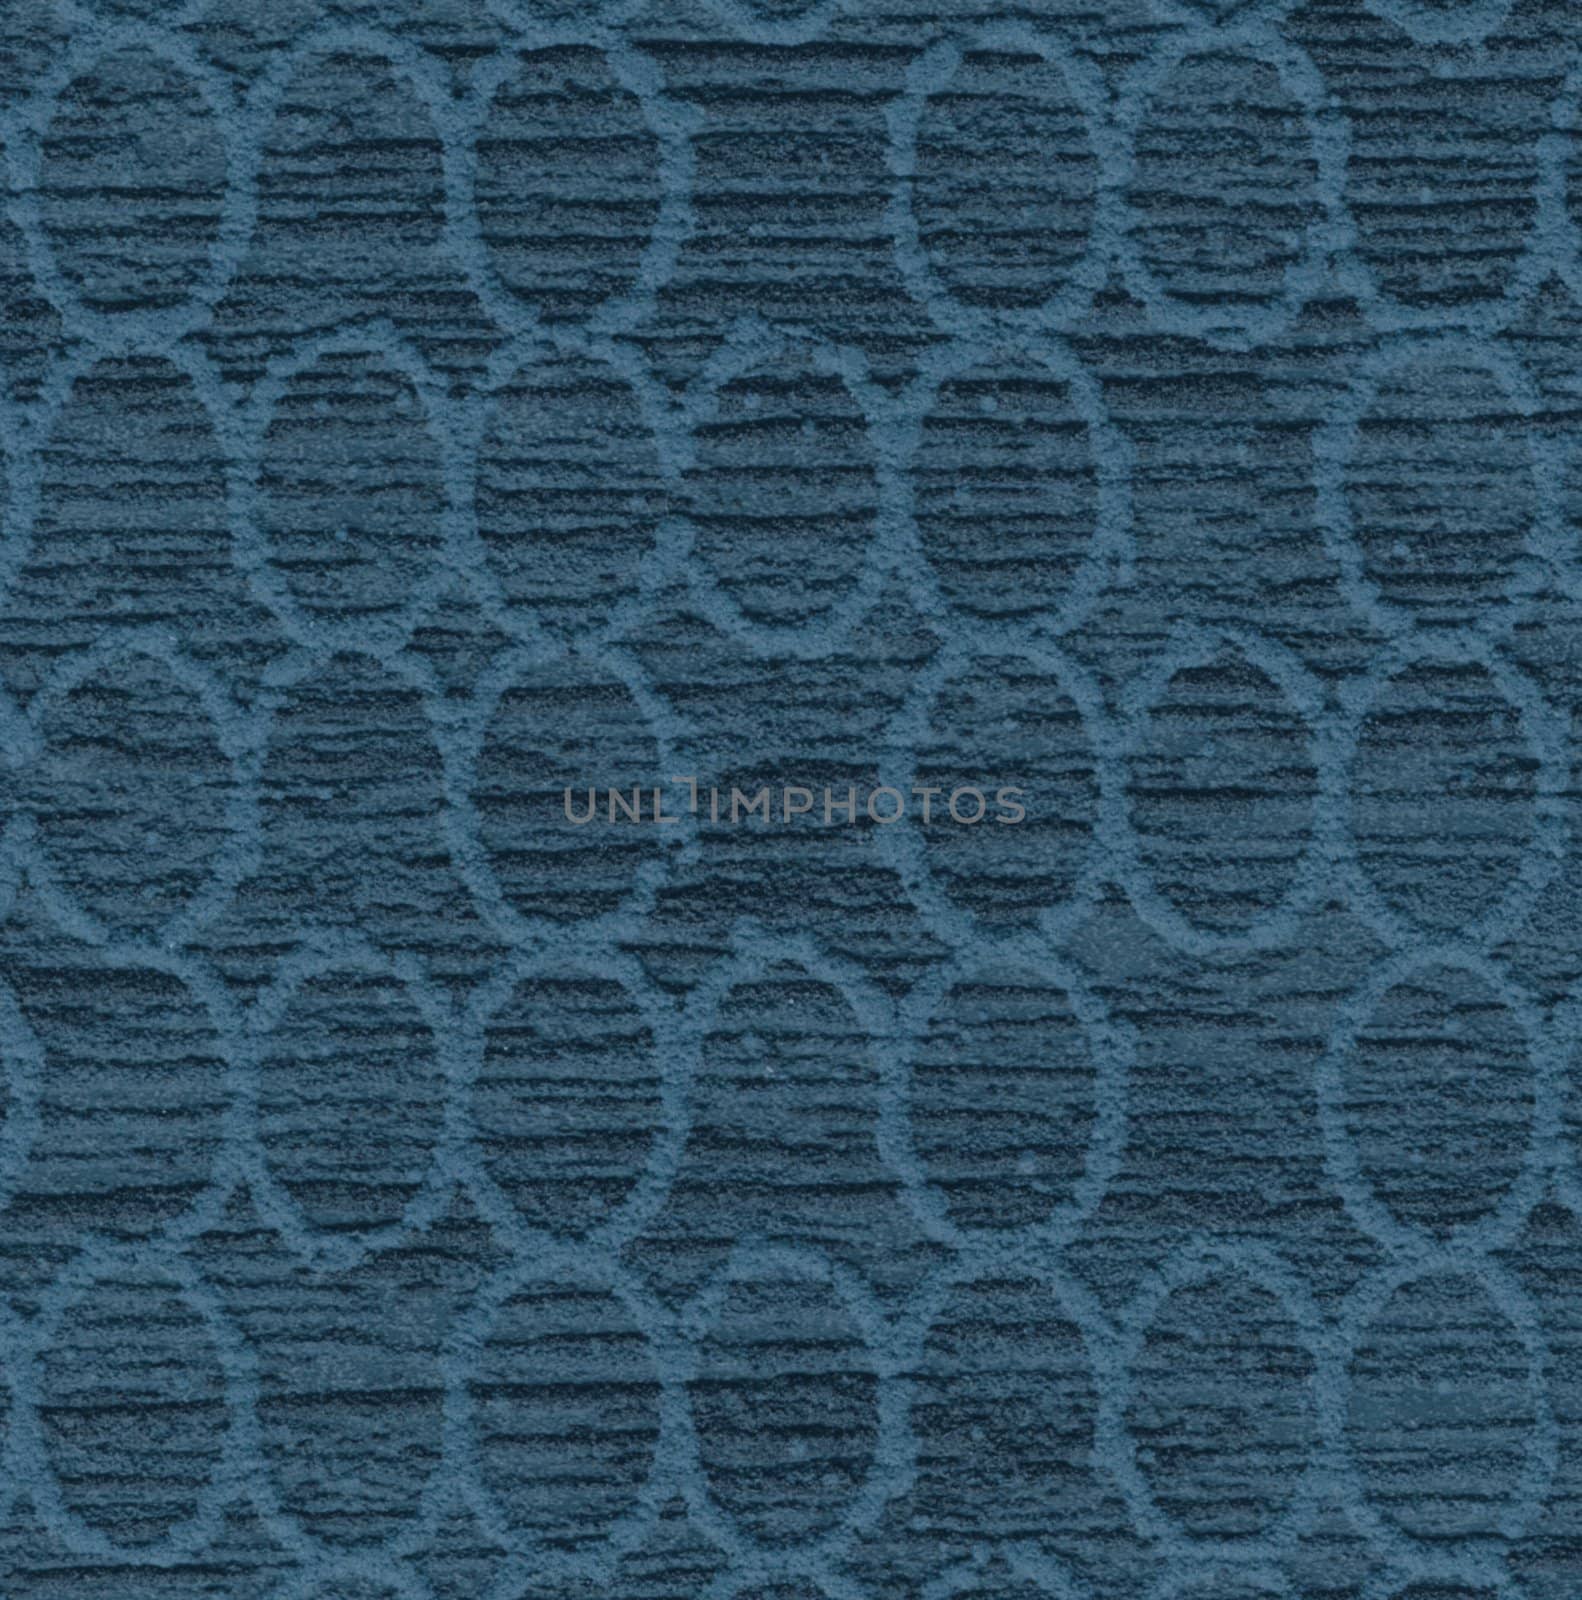 fabric pattern background